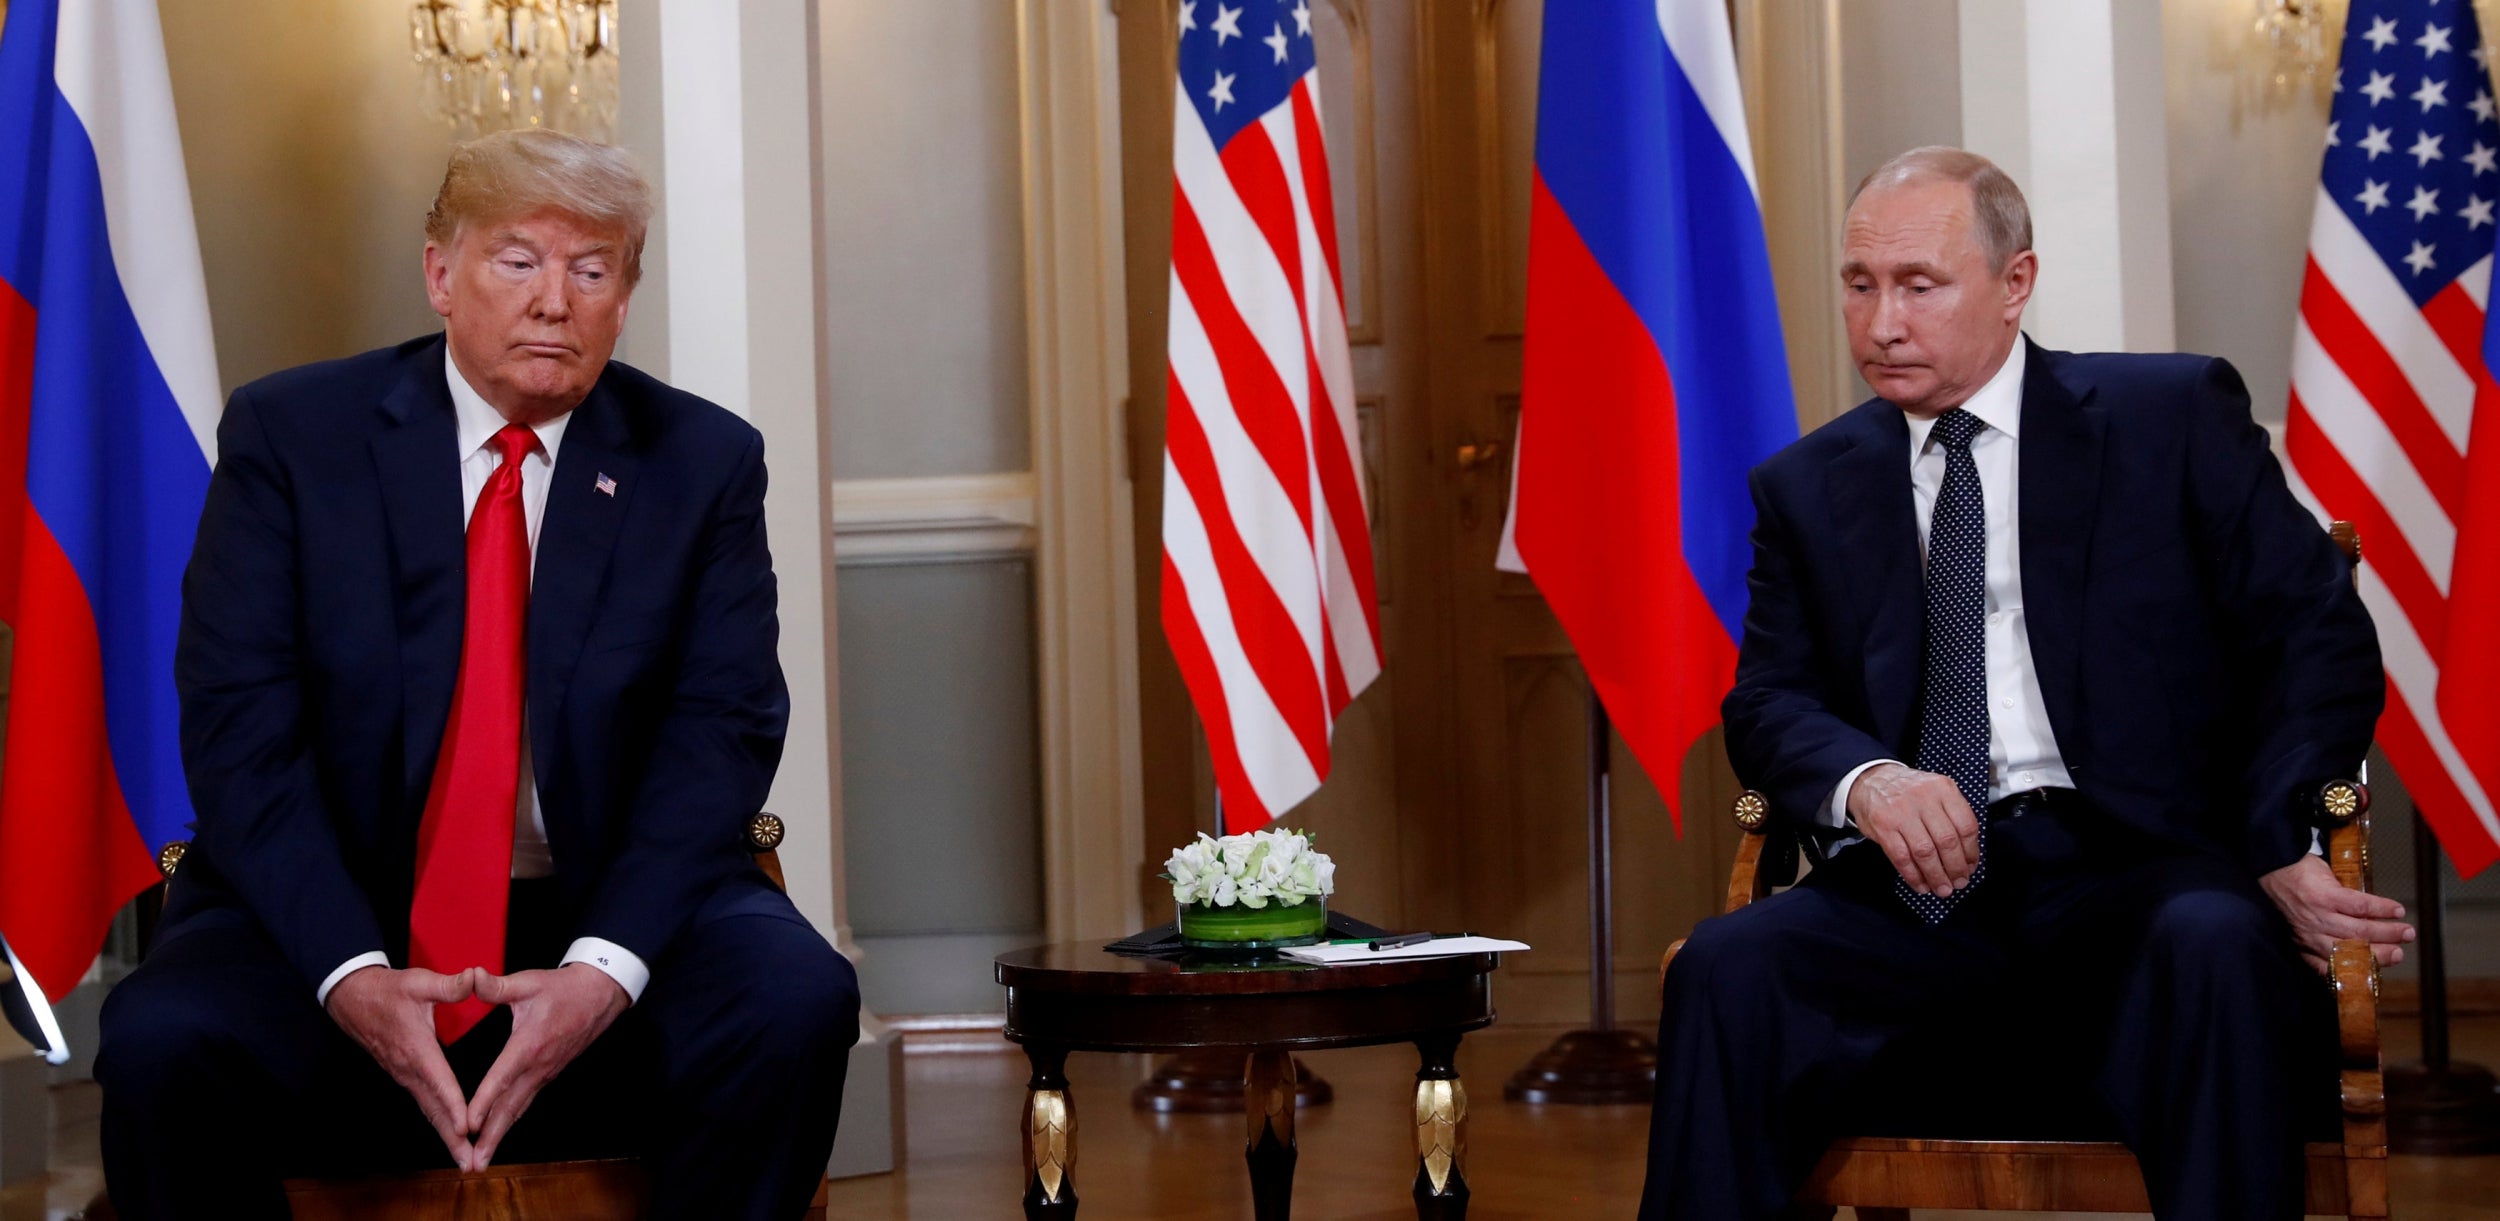 Donald Trump and Vladimir Putin in Helsinki in 2019